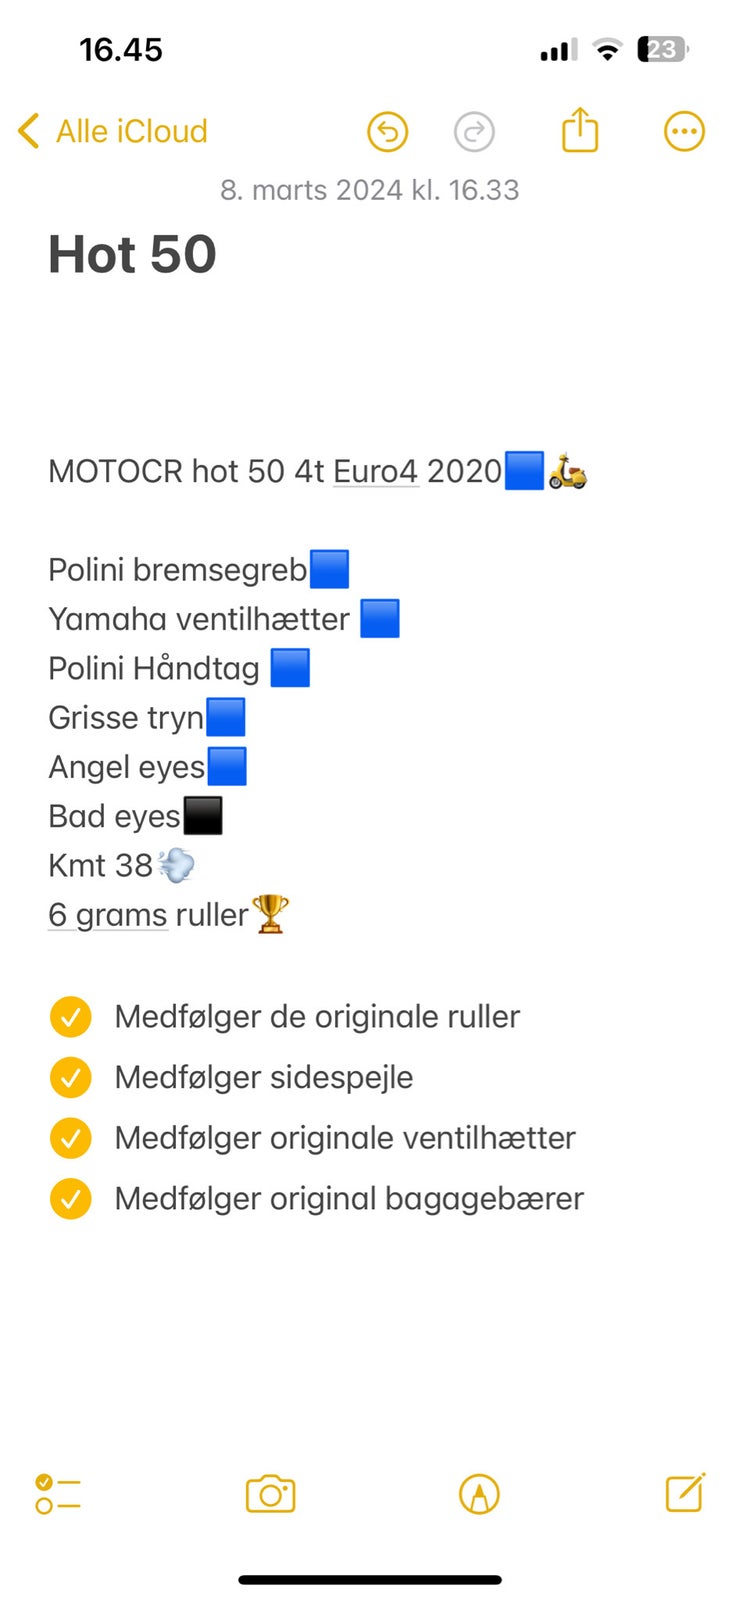 PGO MOTOCR, 2020, 7500 km